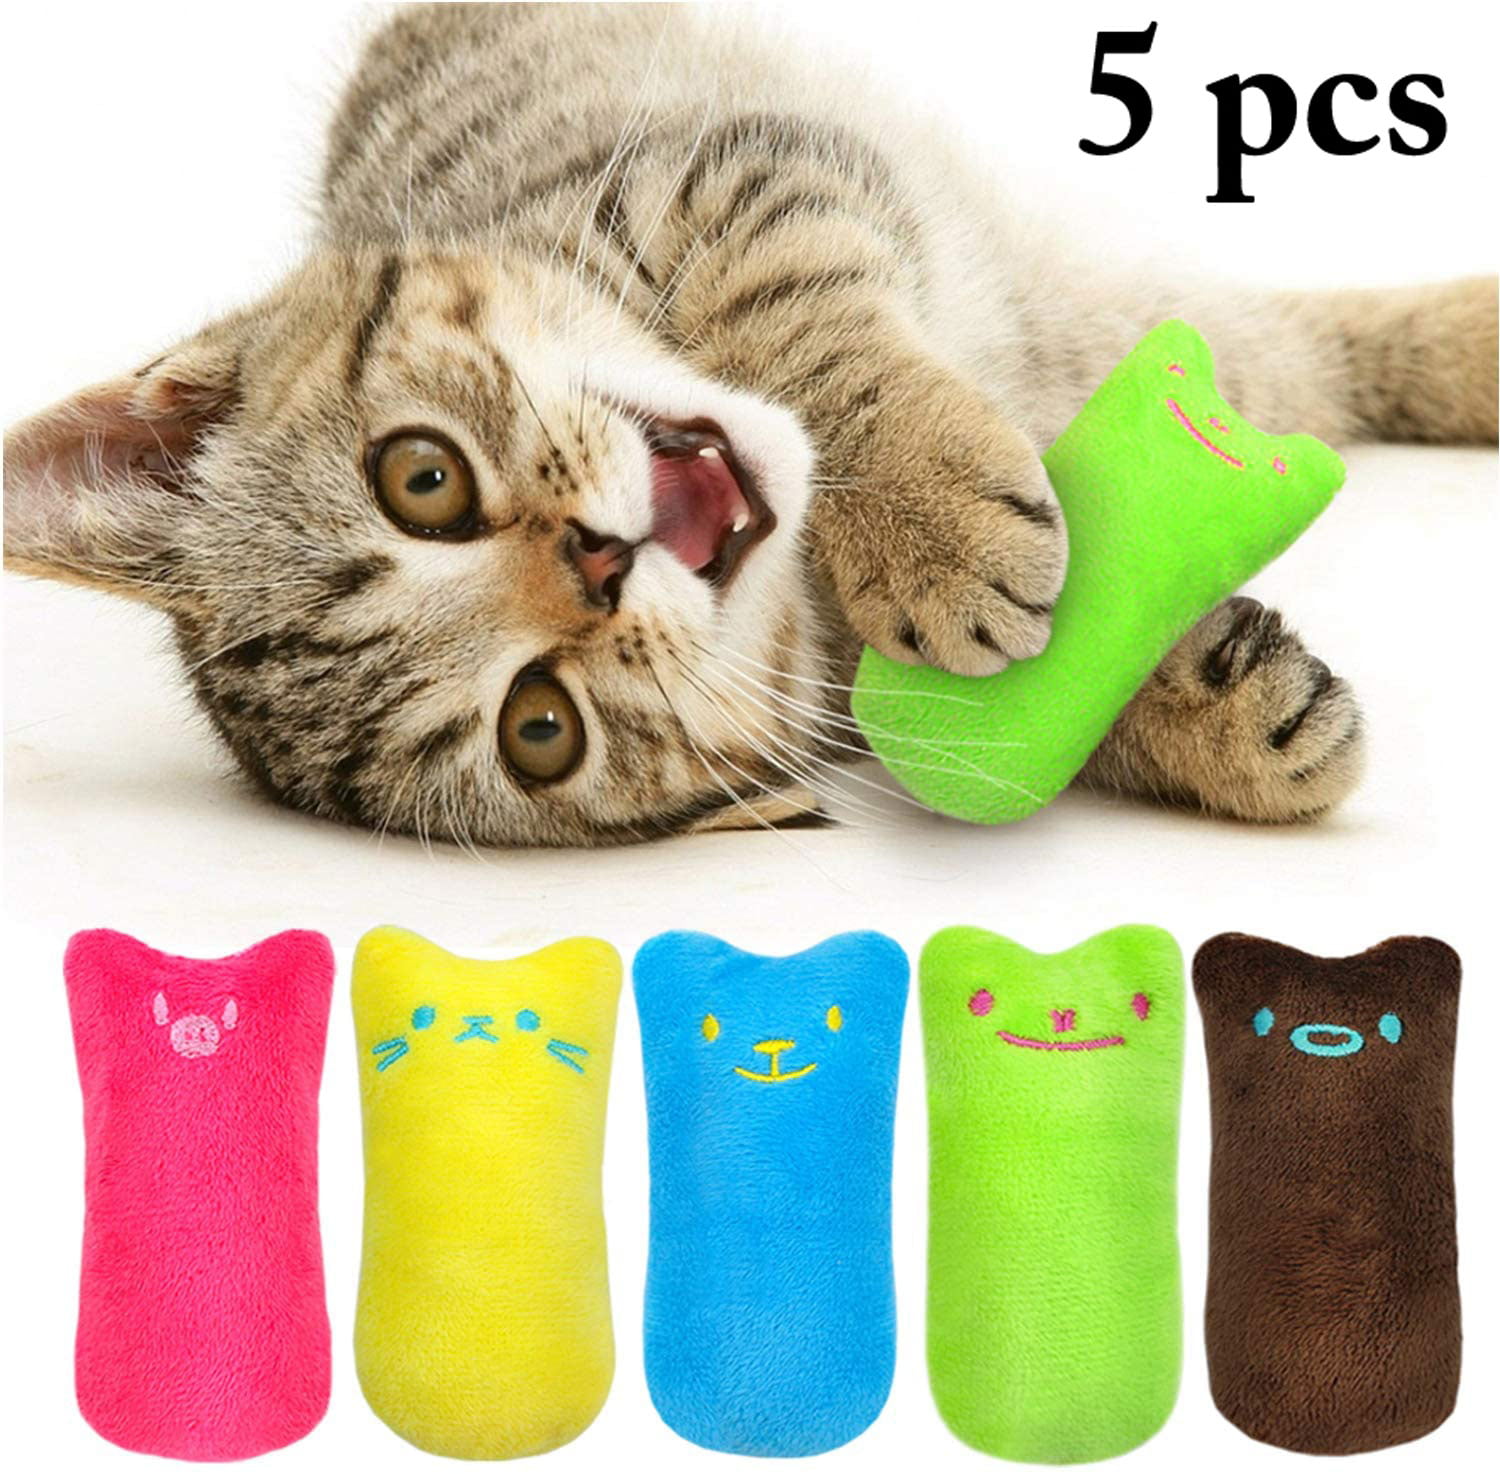 Legendog 5Pcs Cat Chew Toy Bite Resistant Catnip Toys for Cats,Catnip Filled Cartoon Mice Cat Teething Chew Toy